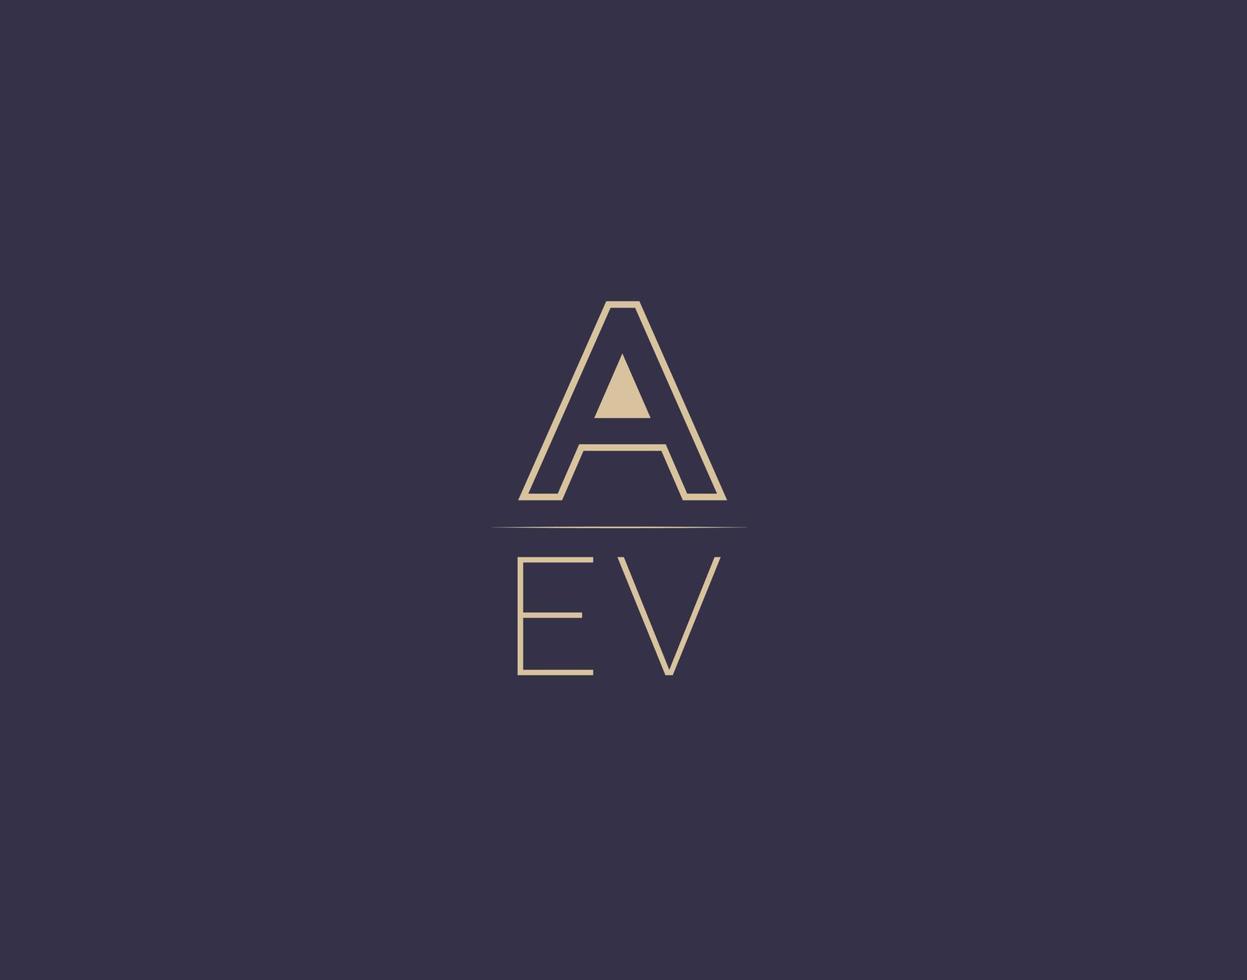 design de logotipo de carta aev imagens vetoriais minimalistas modernas vetor